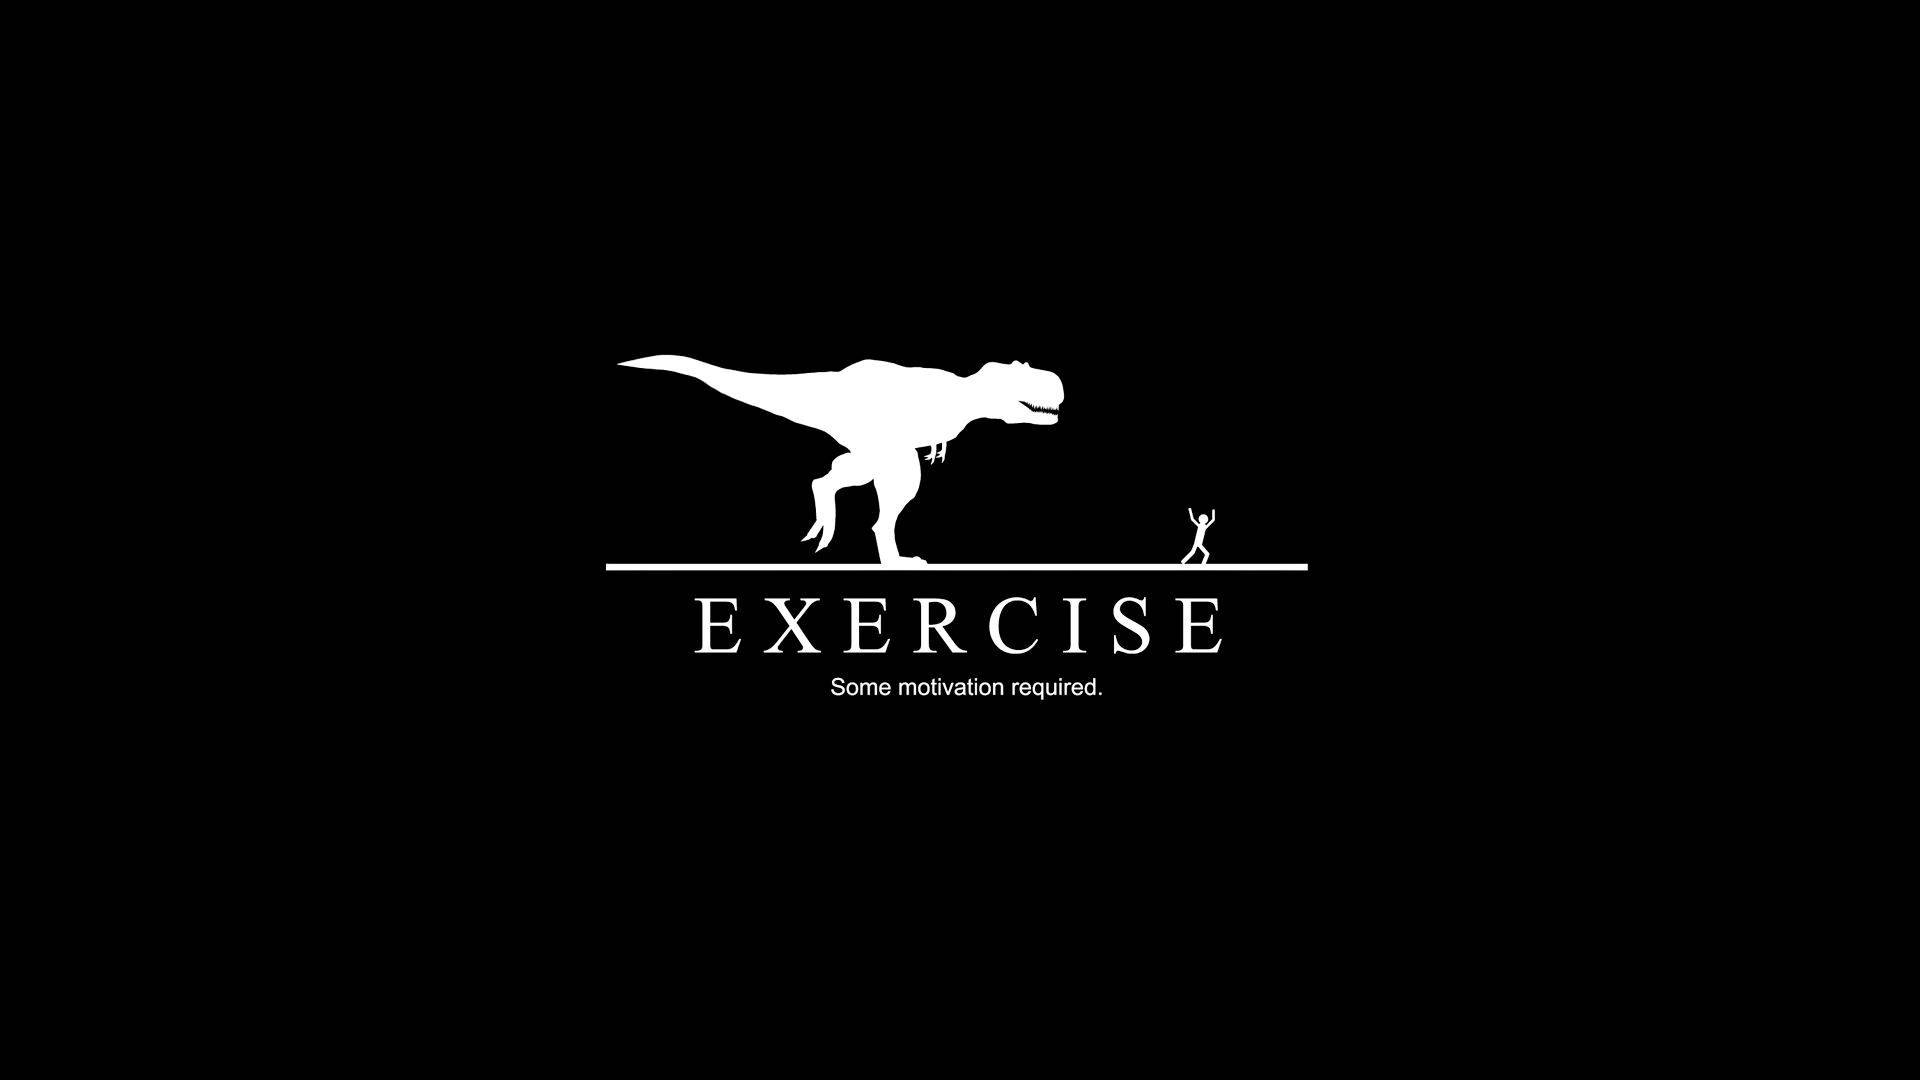 Inspirational Exercise